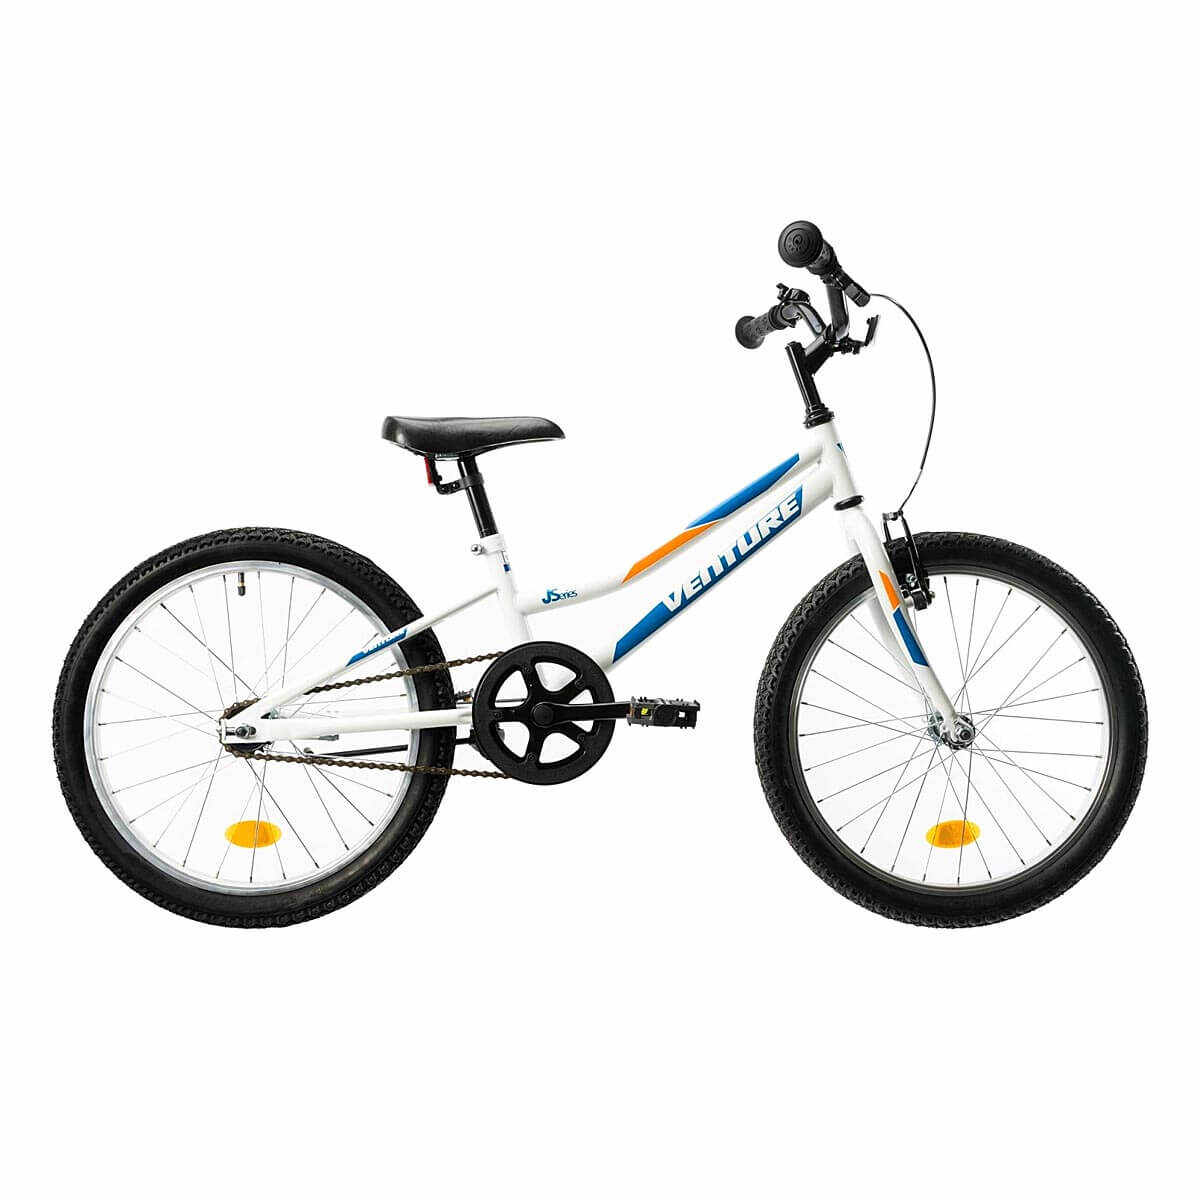 Bicicleta Copii Venture 2011 - 20 Inch, Alb-Albastru